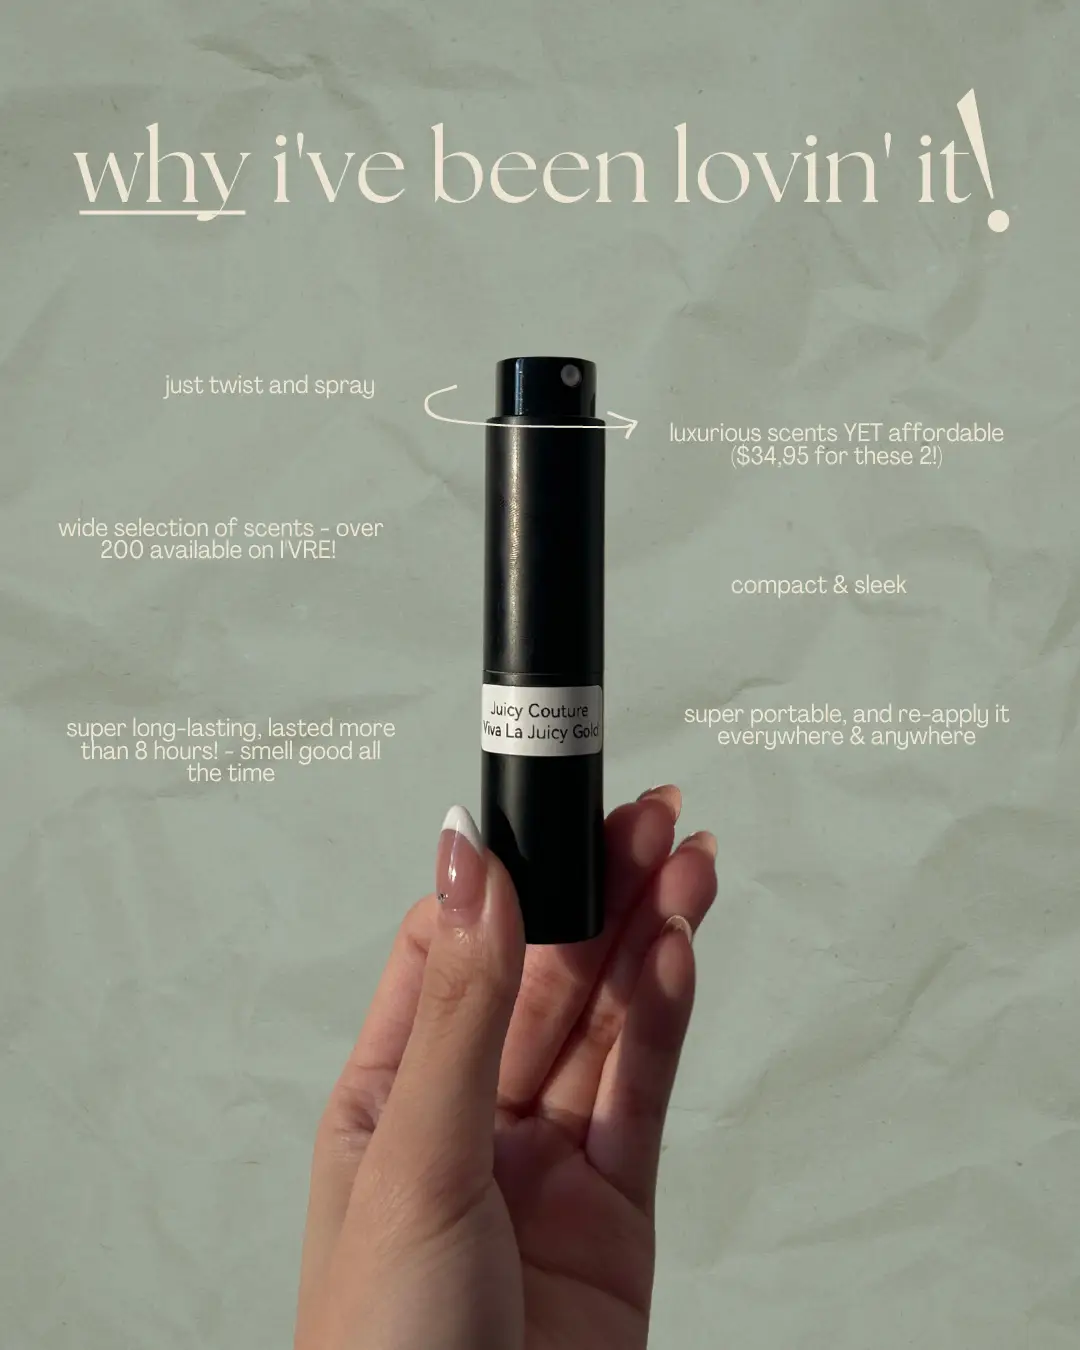 Coco Chanel perfume for $16.95?! + perfume tips 👄